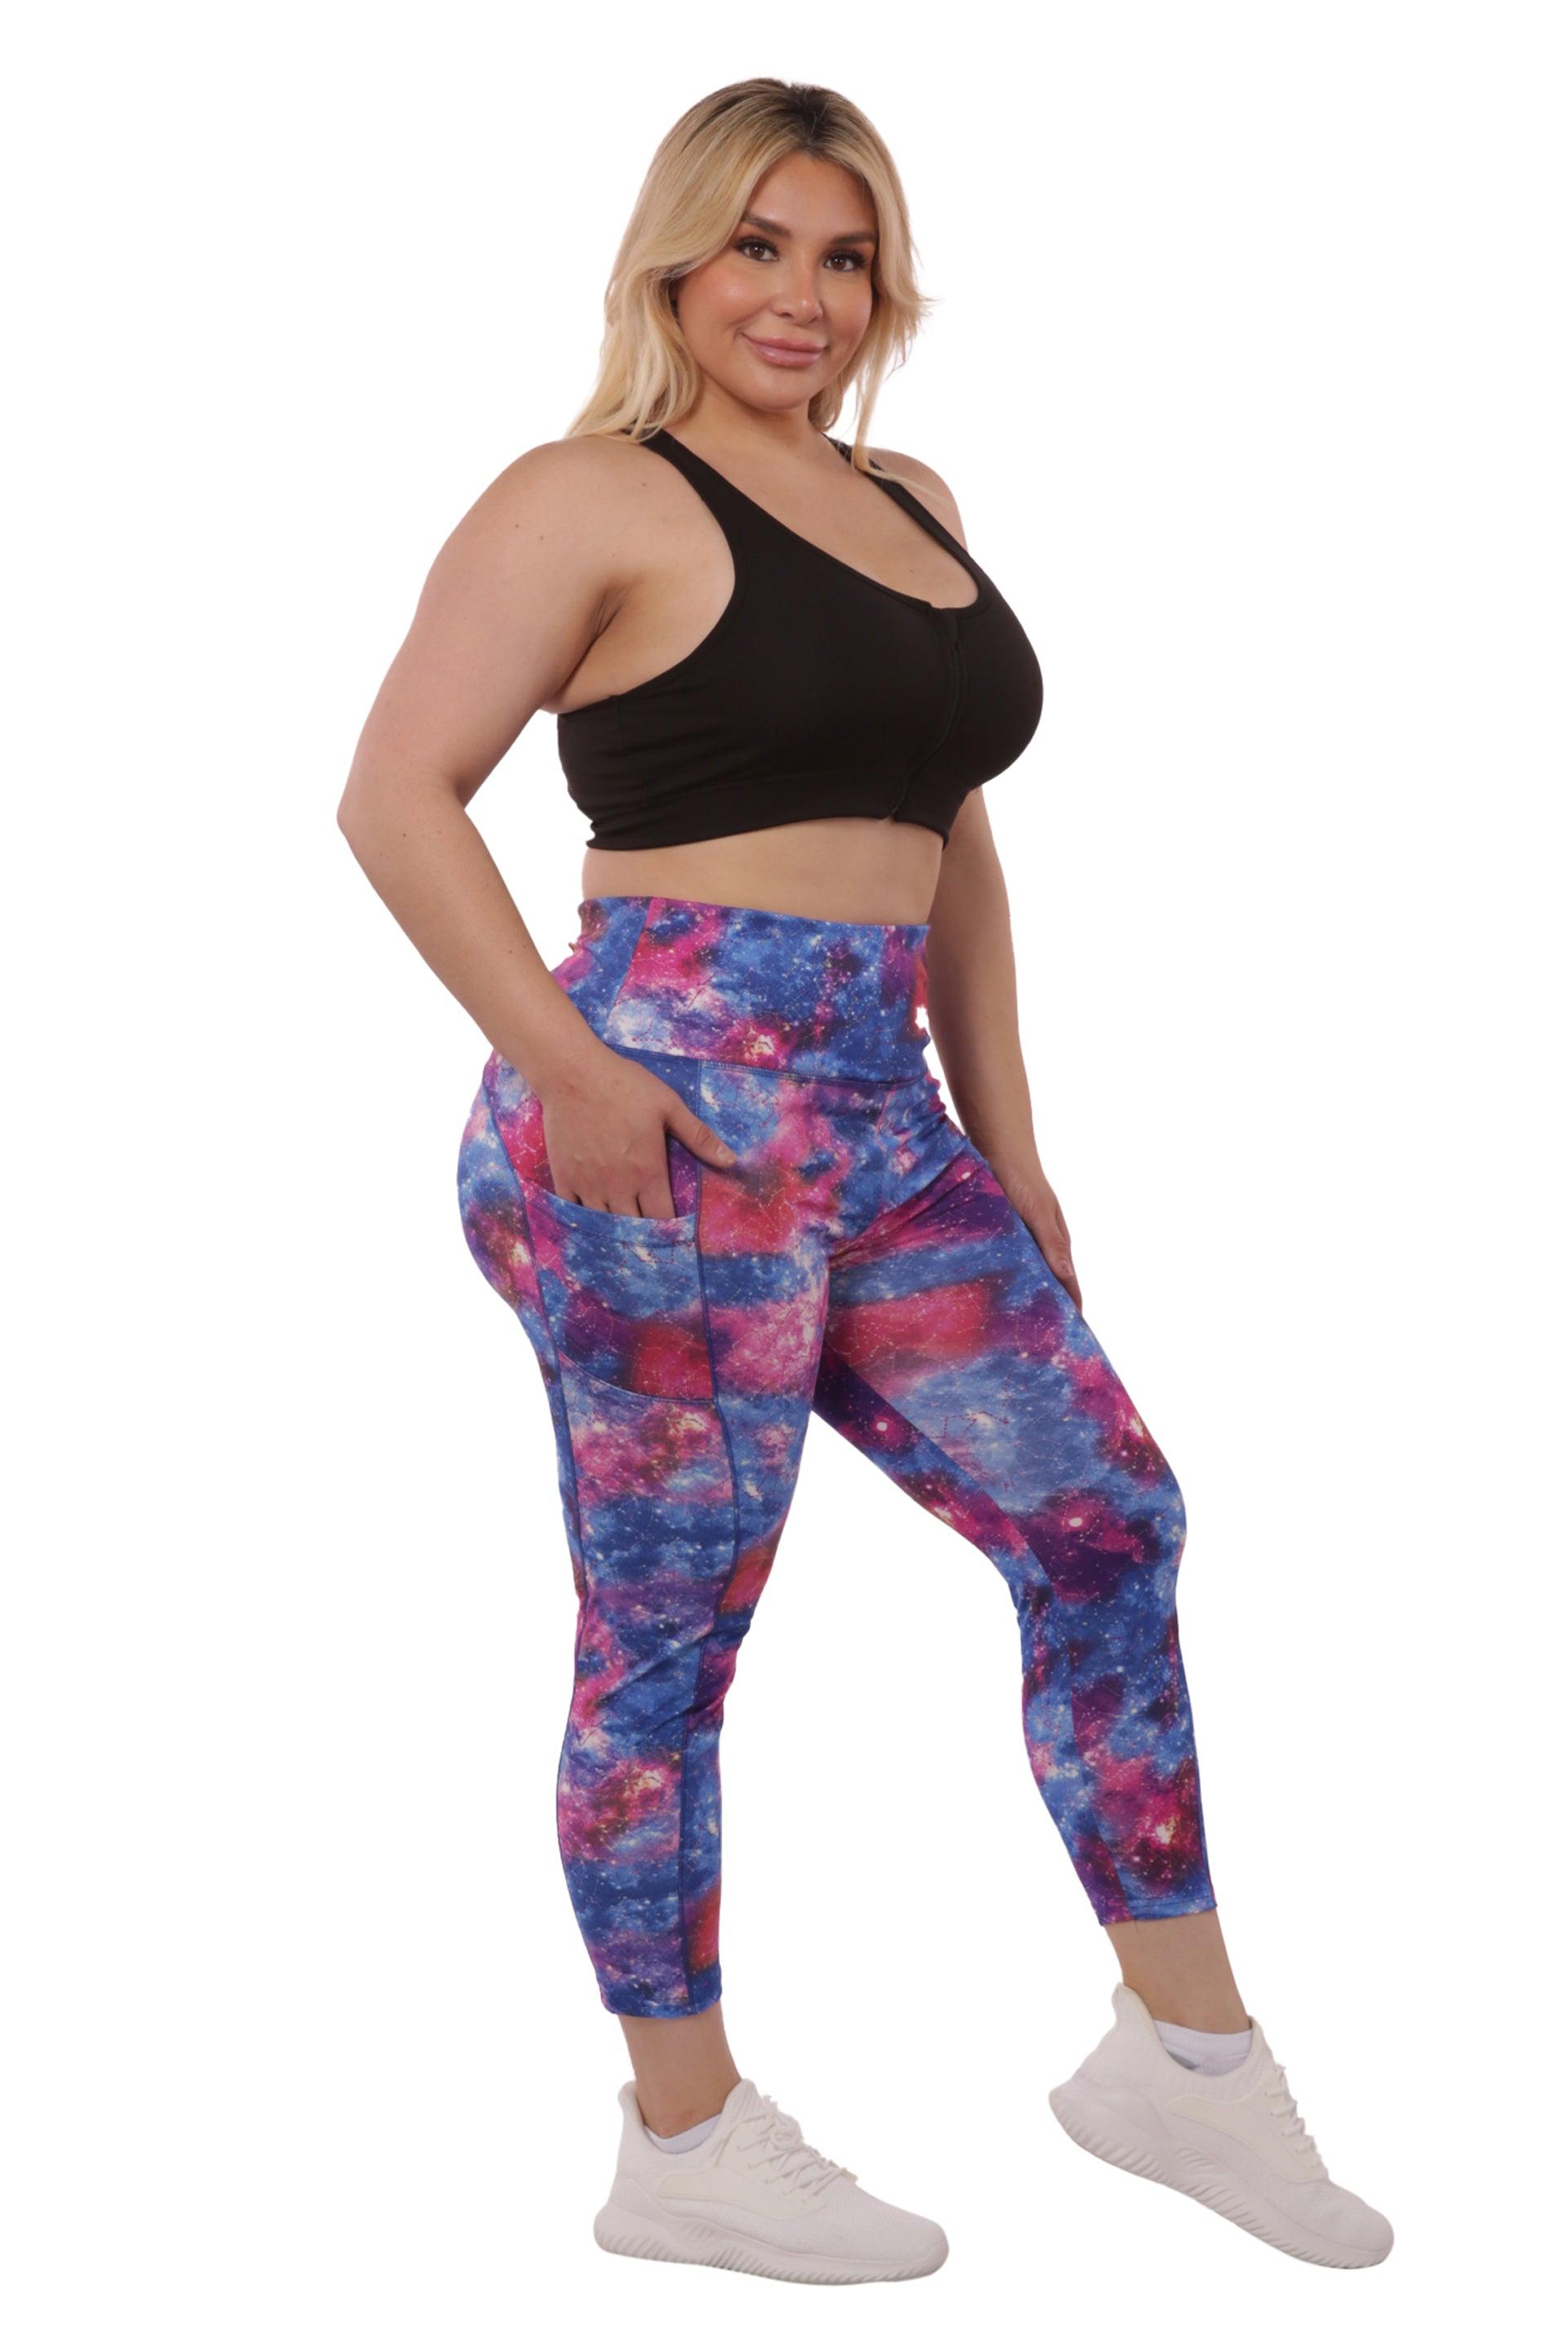 Plus Size High Waist Tummy Control Sports Leggings With Side Pockets - Blue  & Pink Galaxy